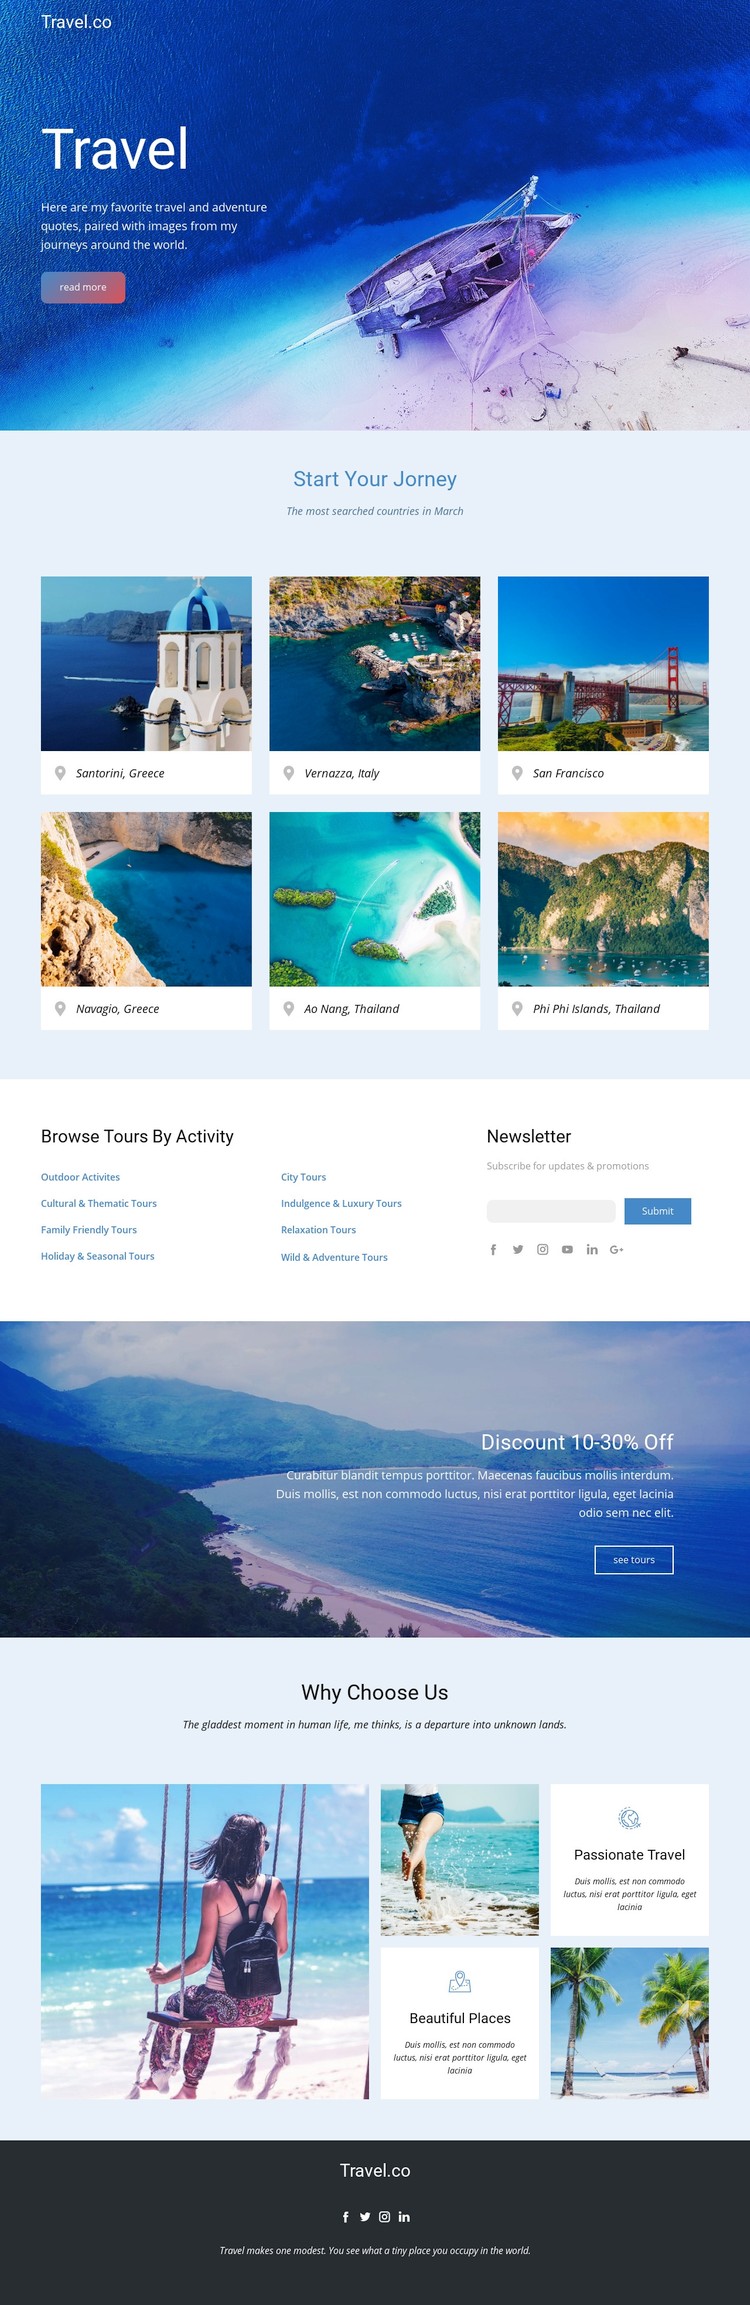 Amazing ideas for travel Webflow Template Alternative